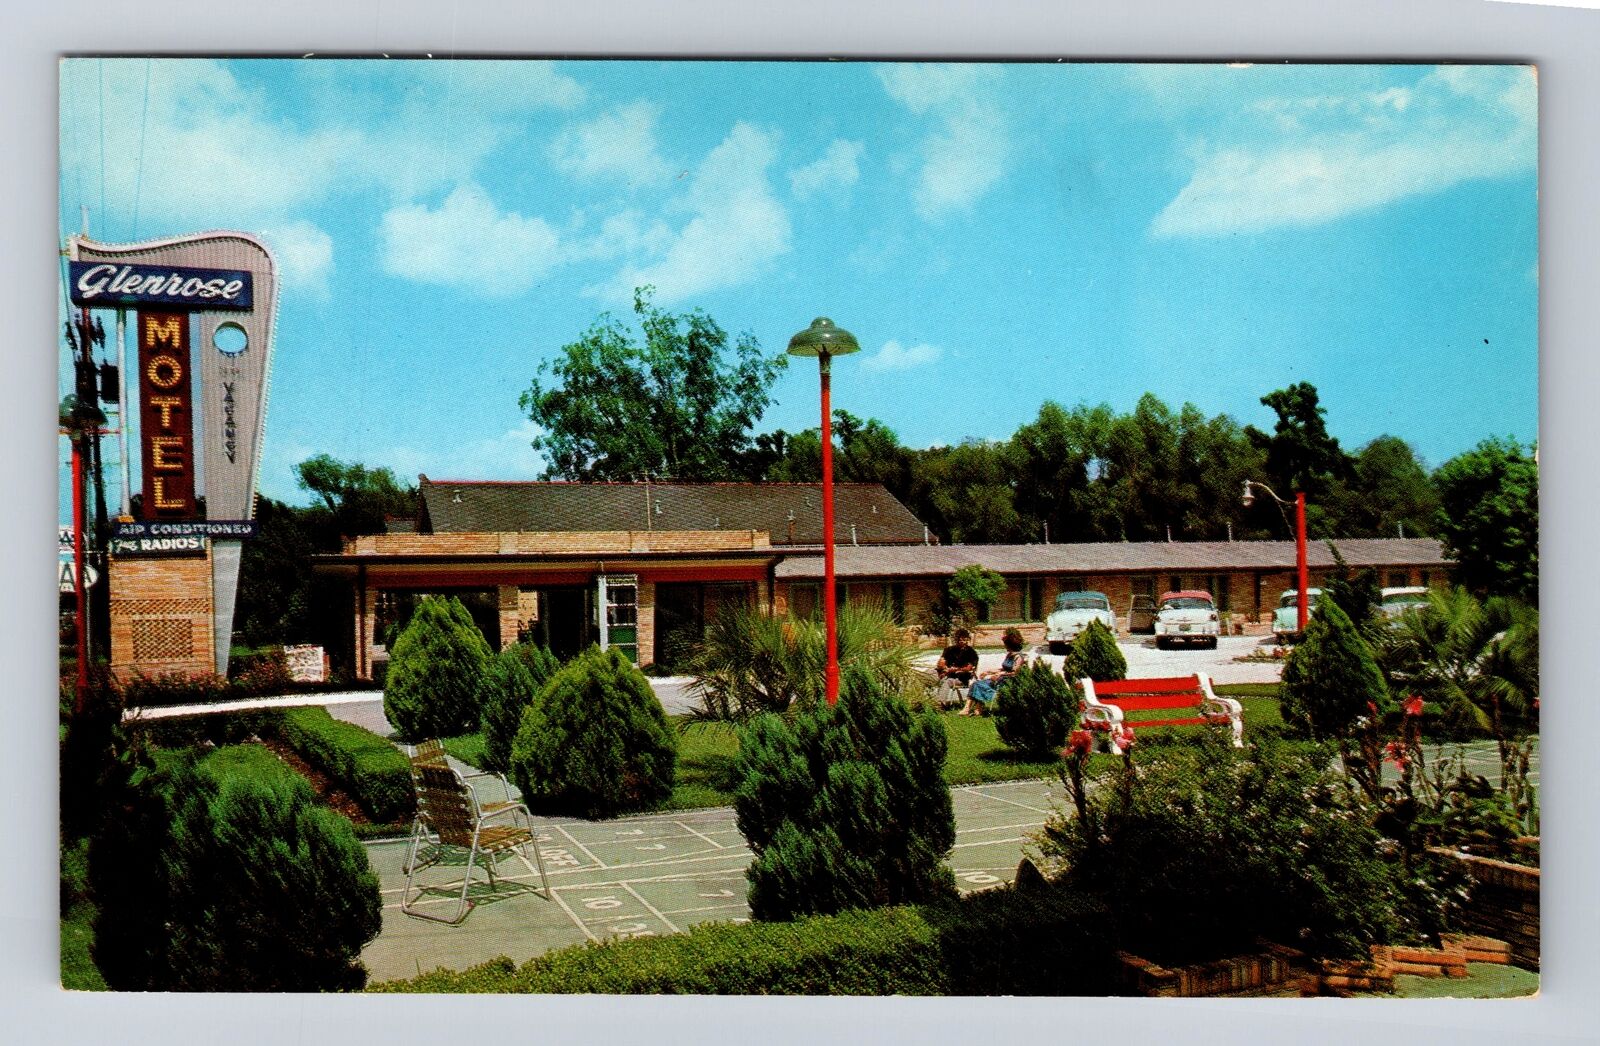 New Orleans LA-Louisiana, Glenrose Motel, Advertising, Vintage Souvenir Postcard